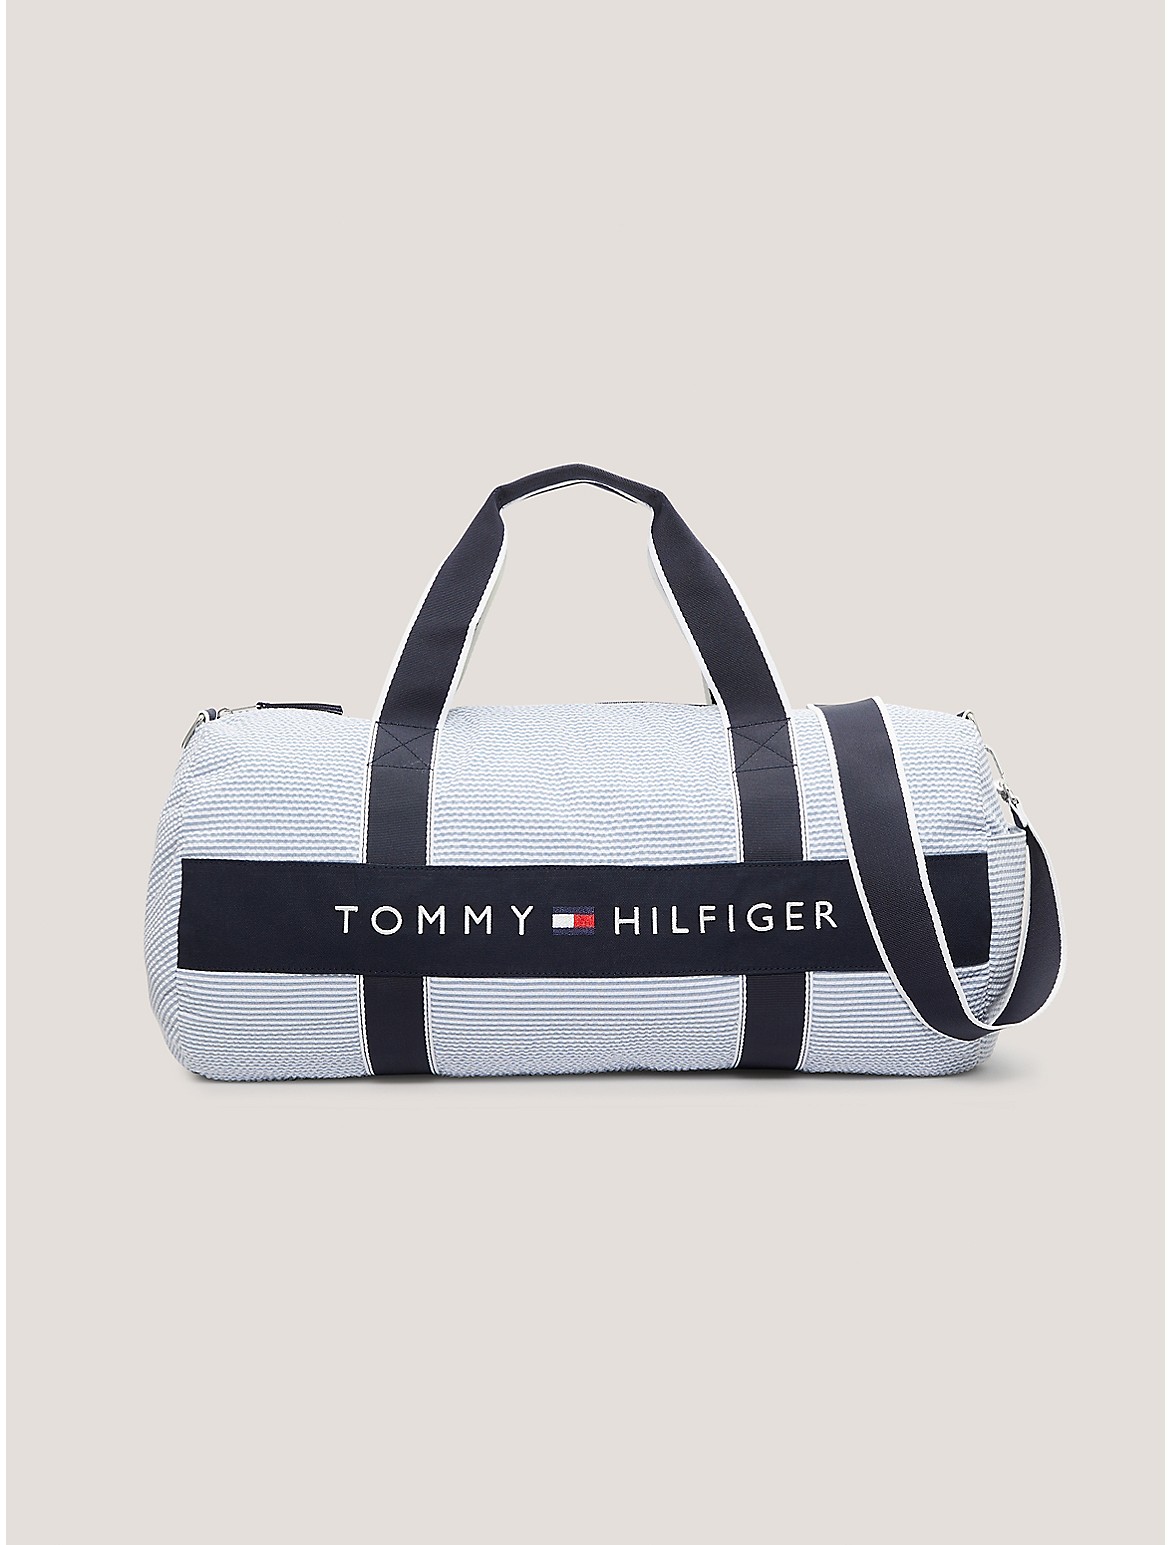 Tommy Hilfiger Men's Seersucker Logo Duffle Bag